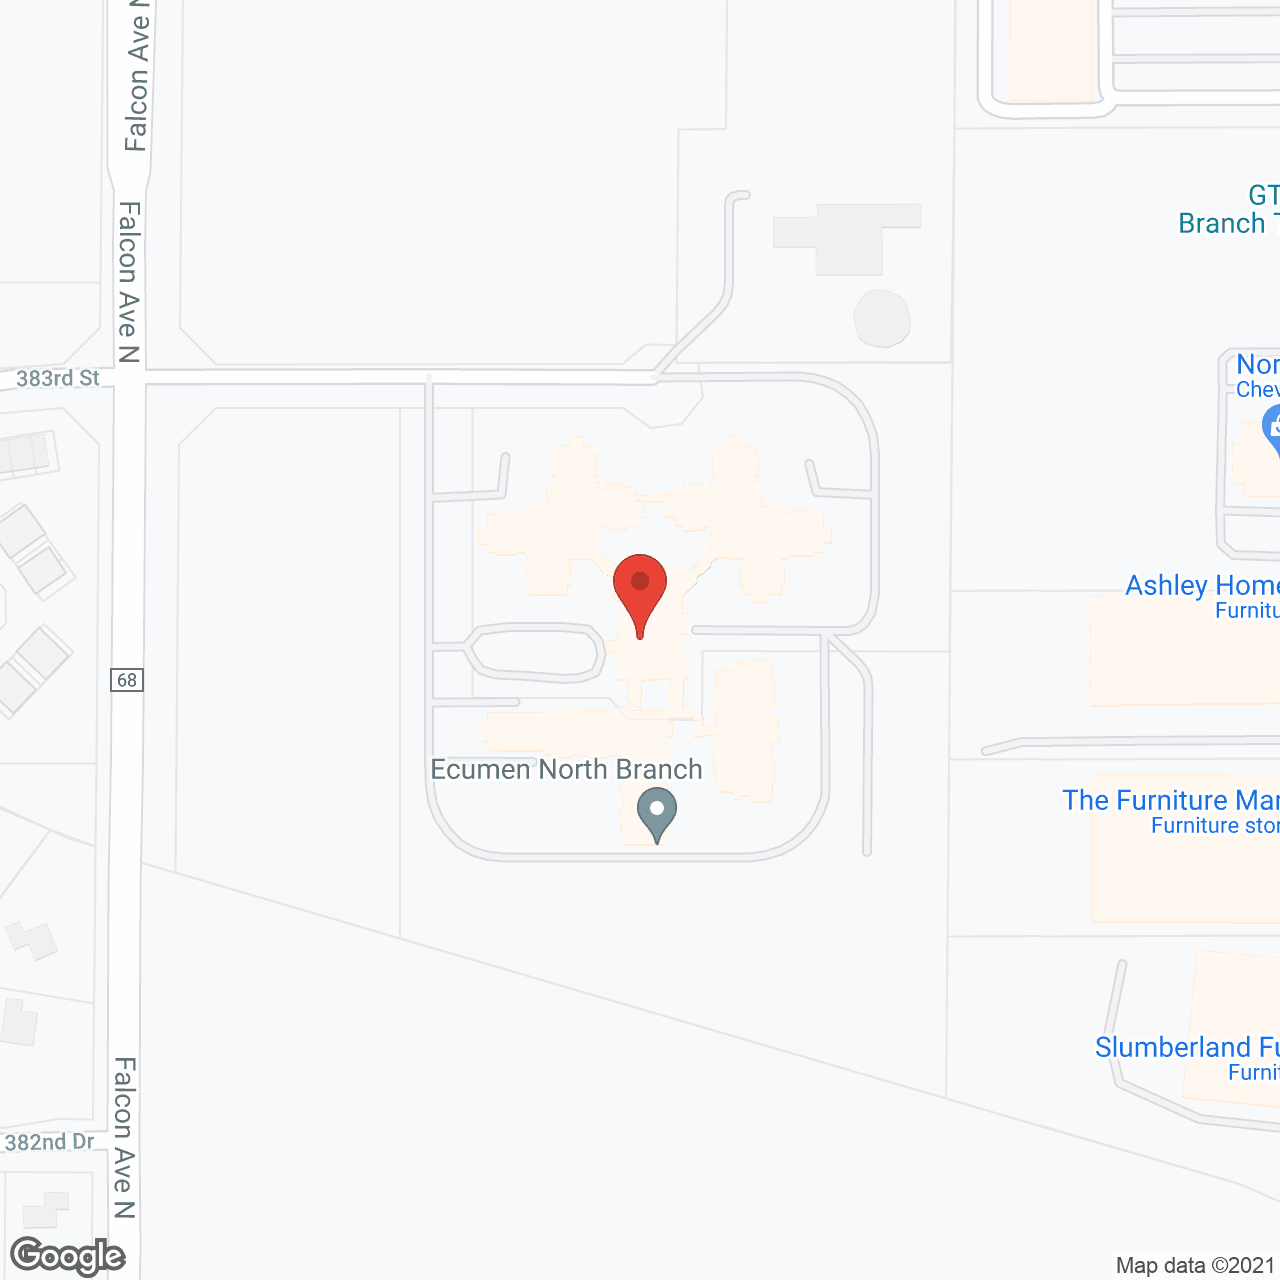 Ecumen North Branch in google map